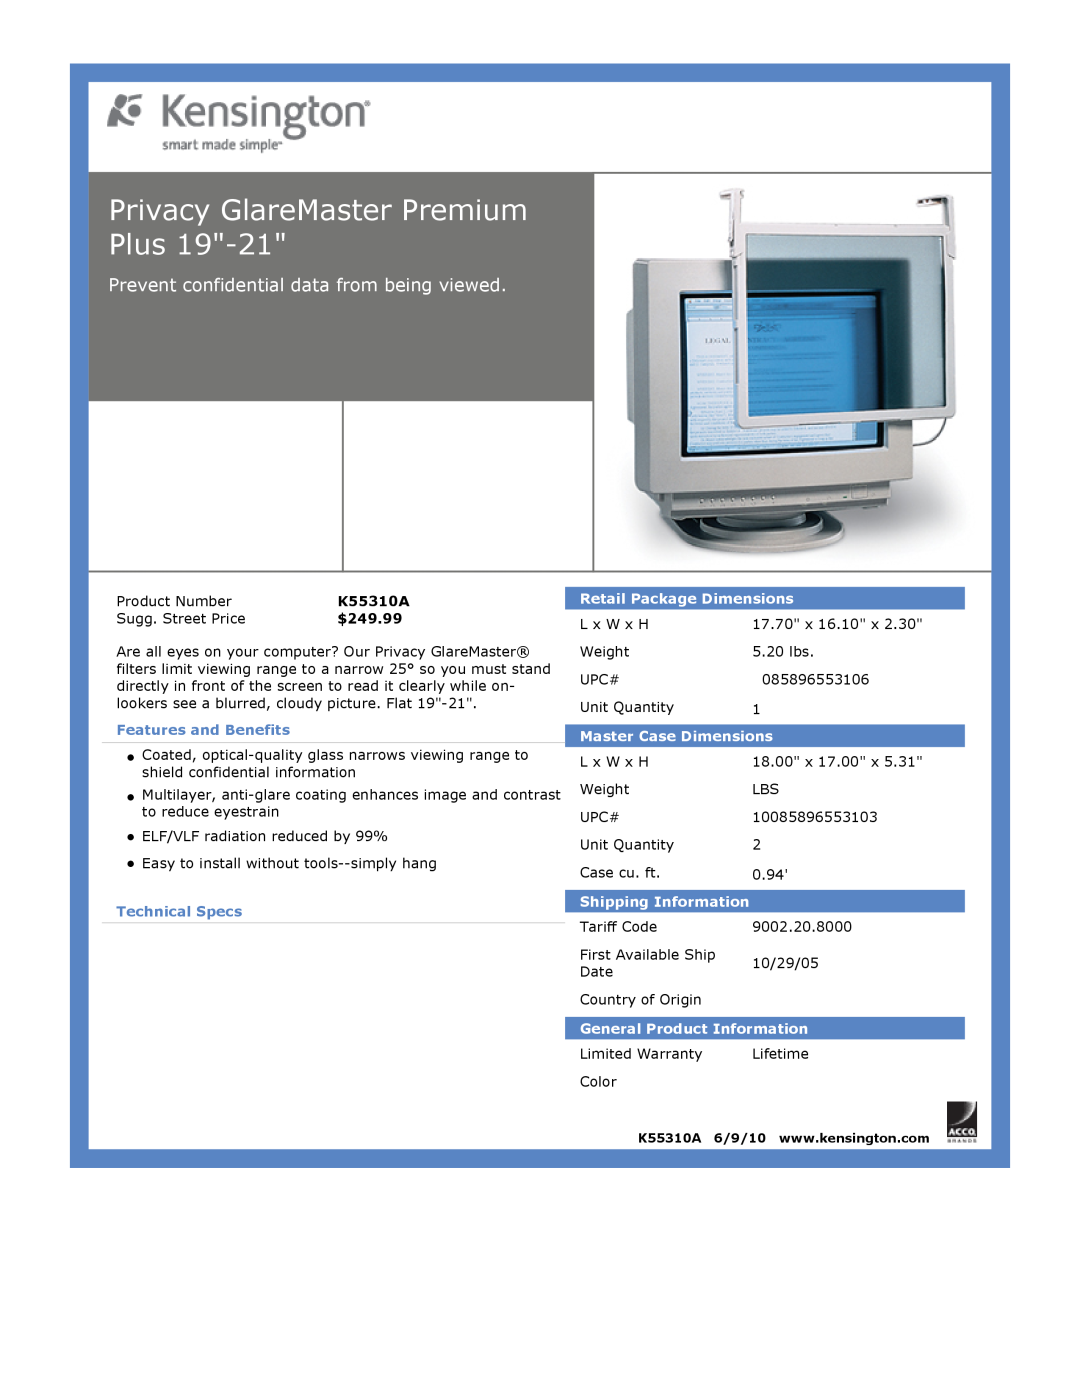 Kensington EU64325 Privacy GlareMaster Premium Plus, $249.99, Prevent confidential data from being viewed, Technical Specs 